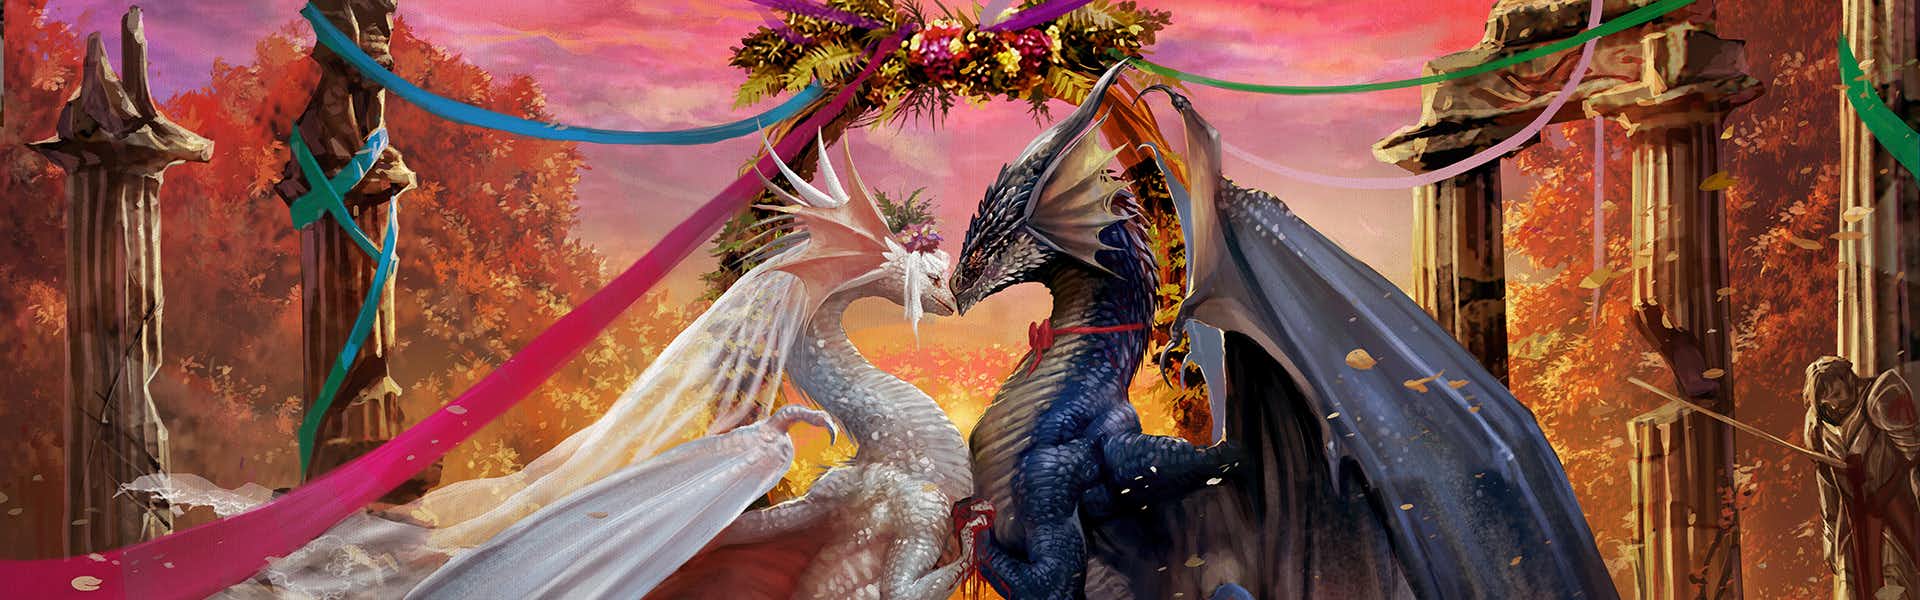 Yu-Gi-Oh! Double dragon card sleeves :: Dragon's Lair